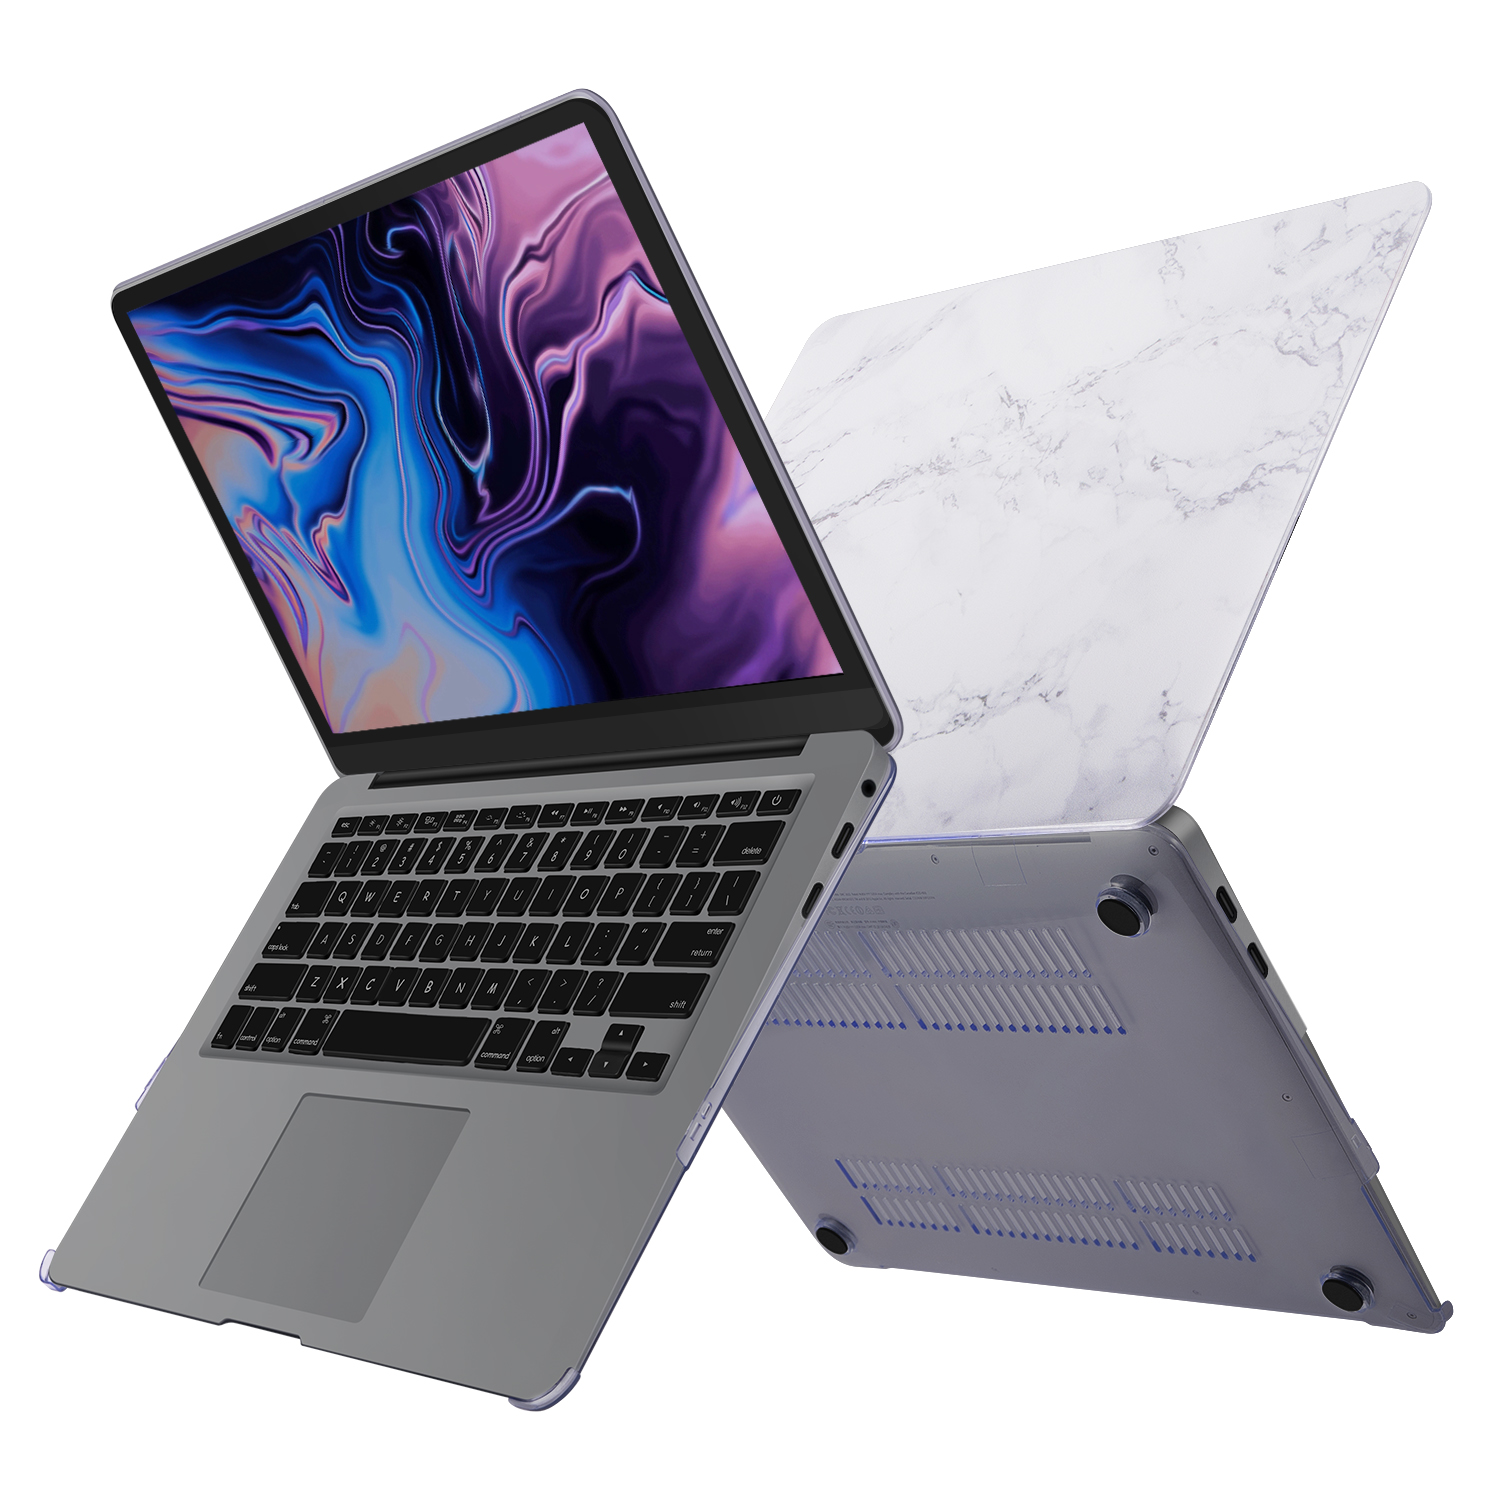 15 inch macbook pro 2016 weight